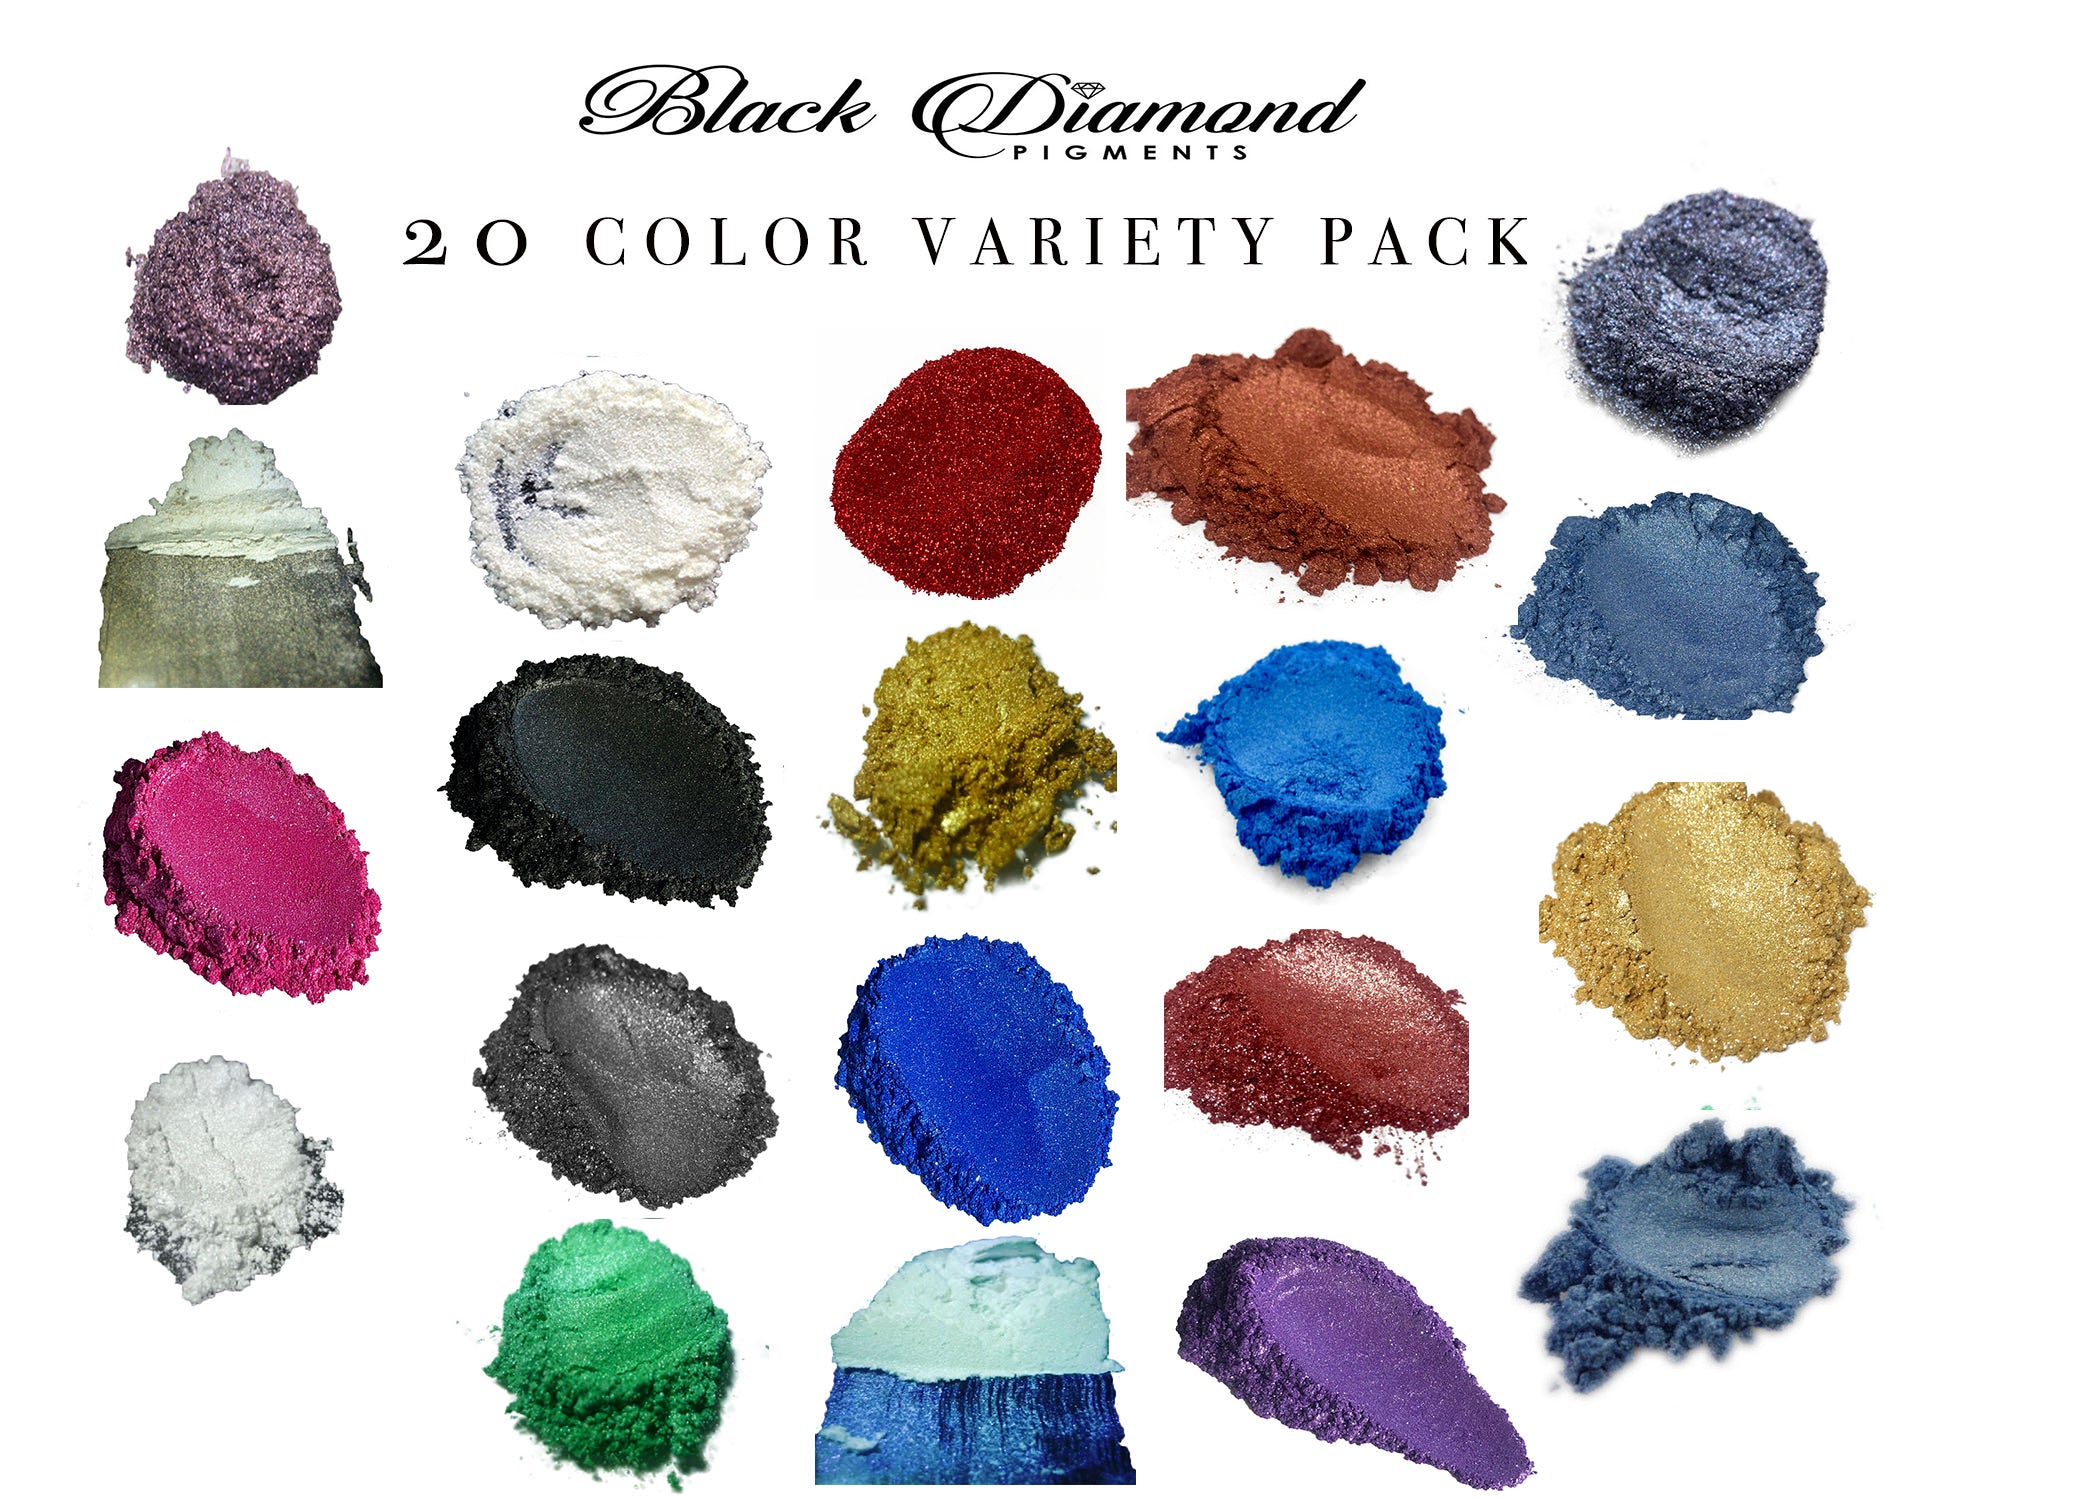 VARIETY PACK 3 (10 COLORS) powder pigment packs Black Diamond Pigments